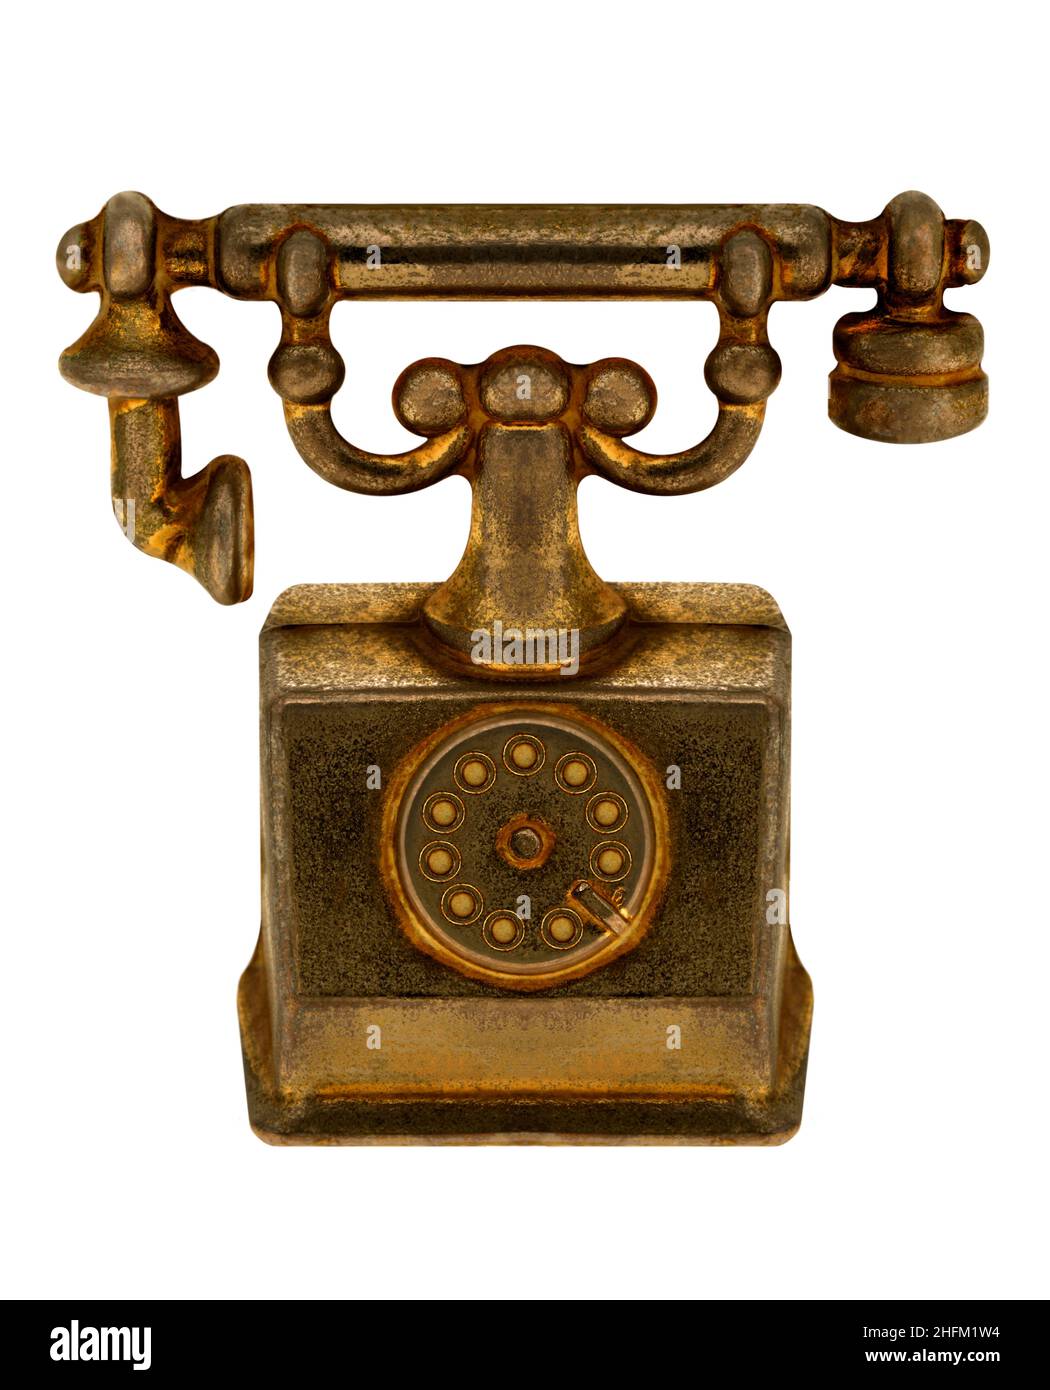 minature dial telephone Stock Photo